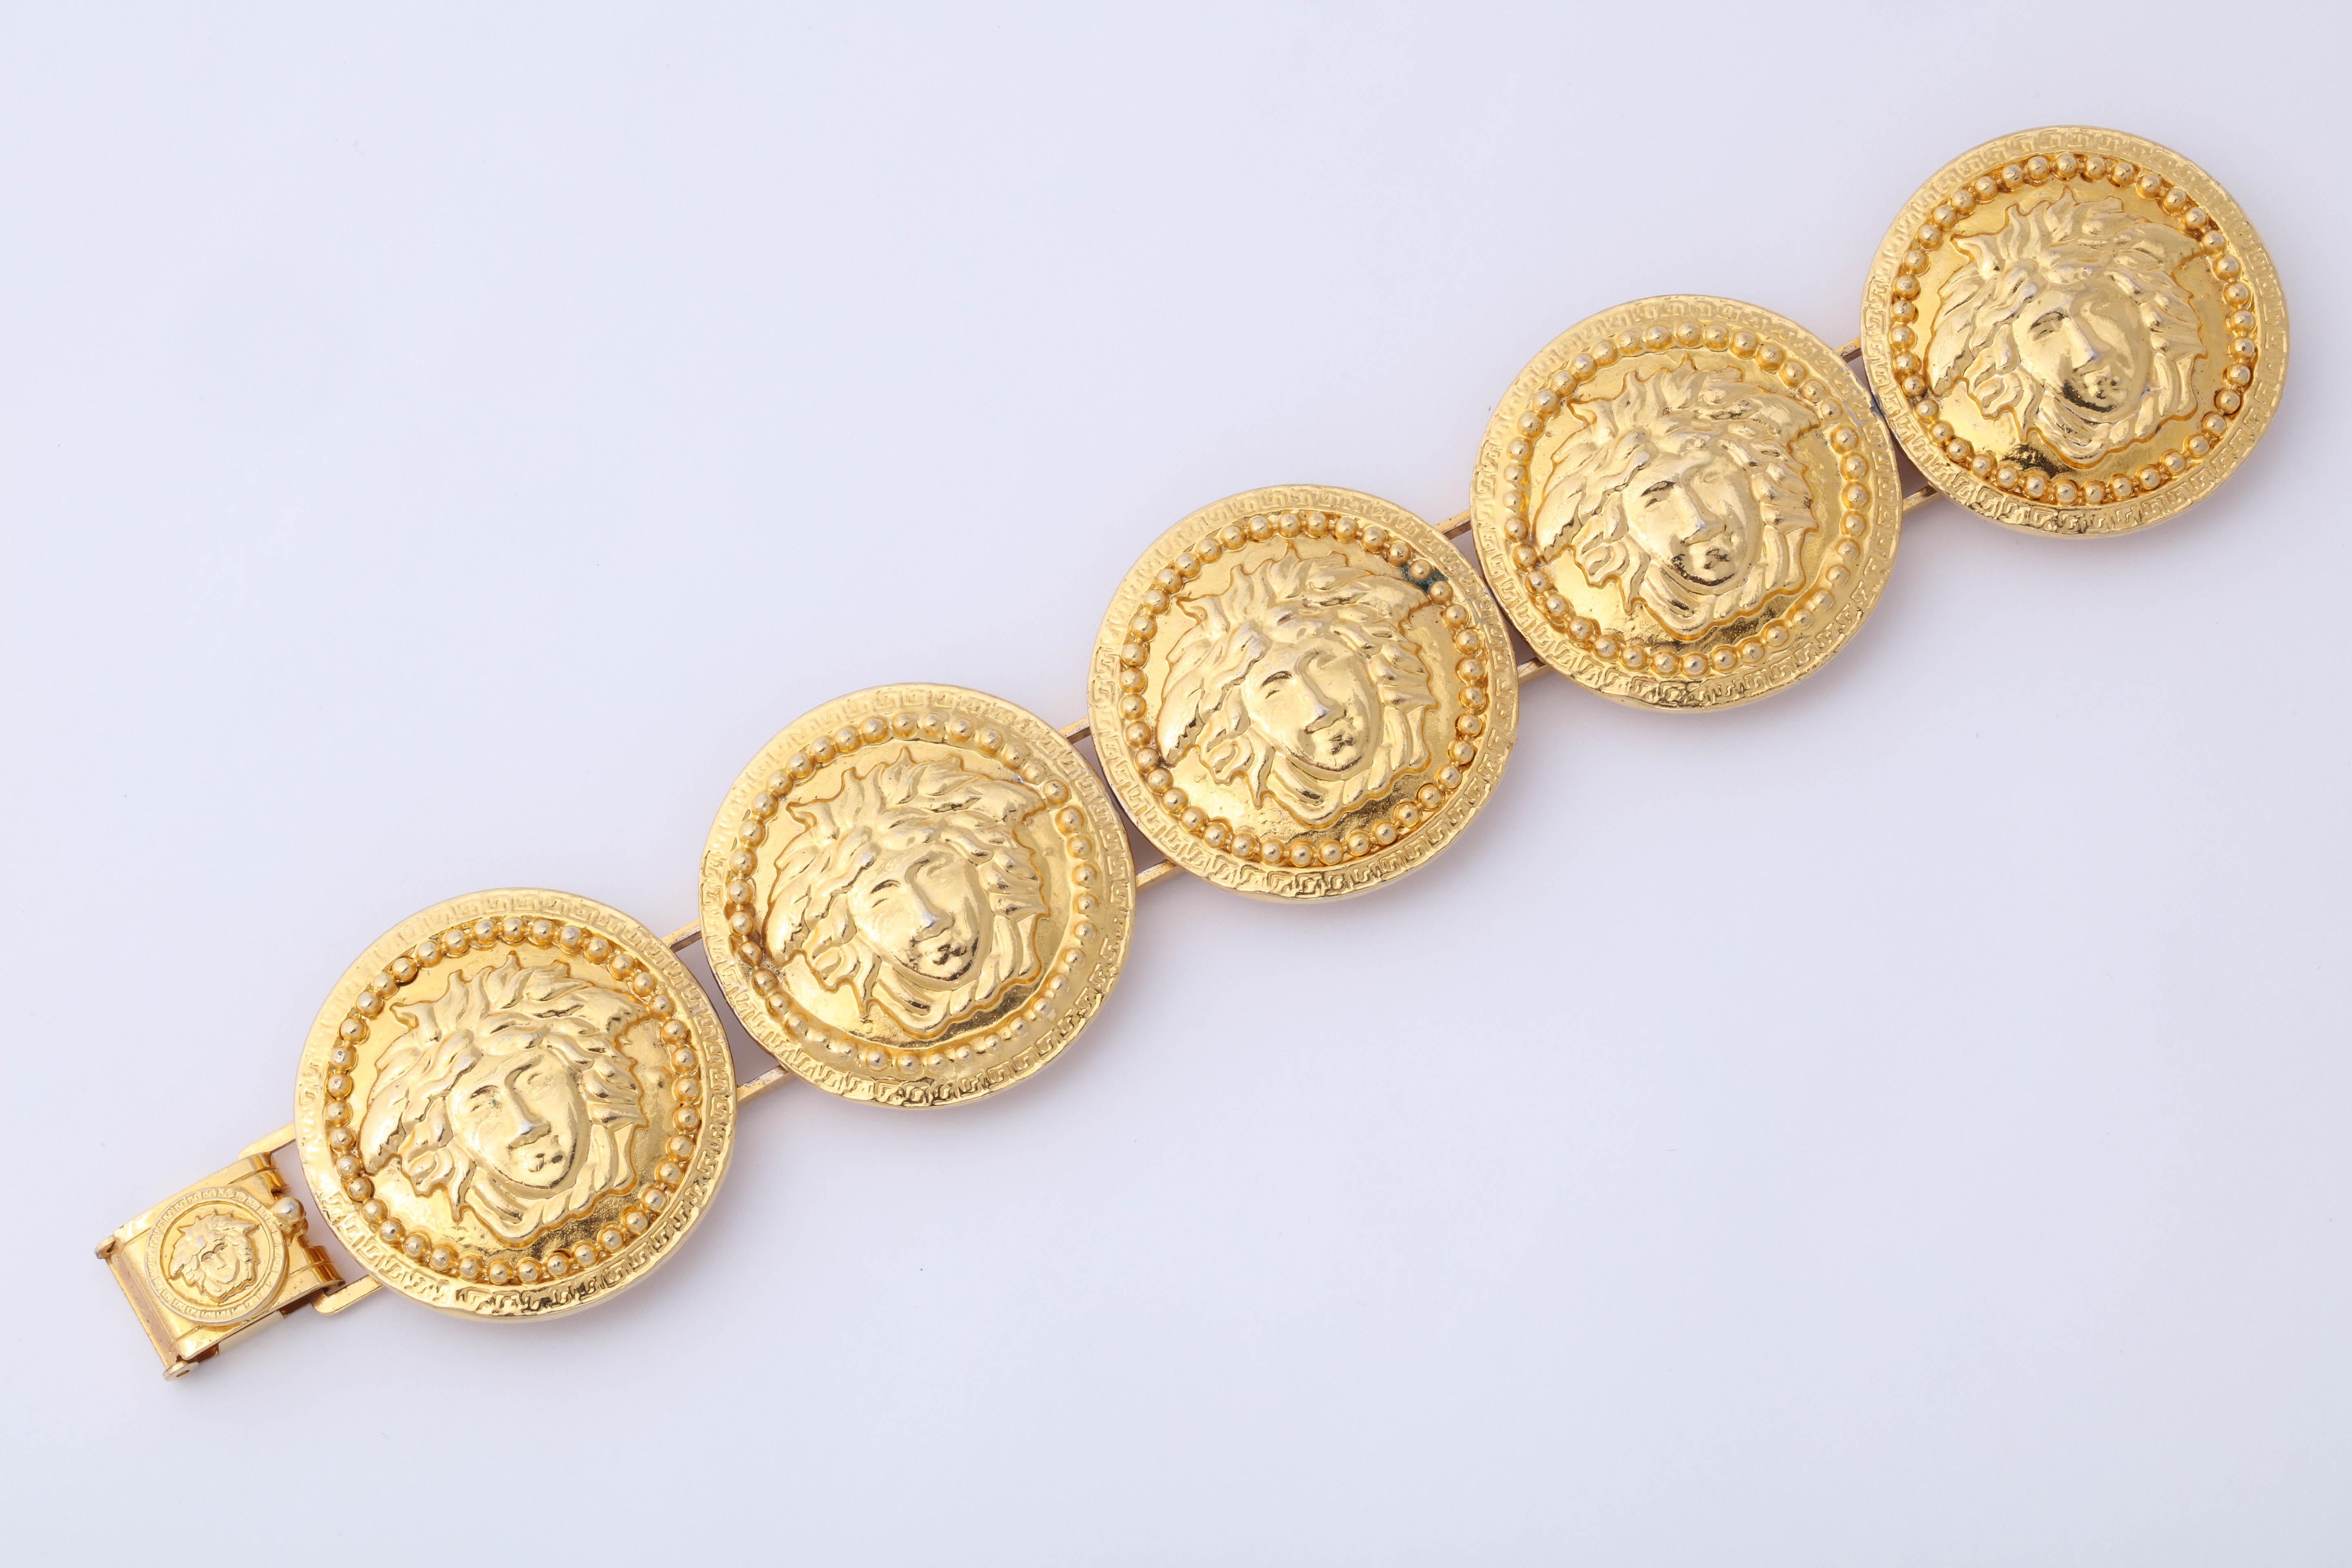 Gianni Versace gold toned bracelet with 5 iconic Medusas motifs.